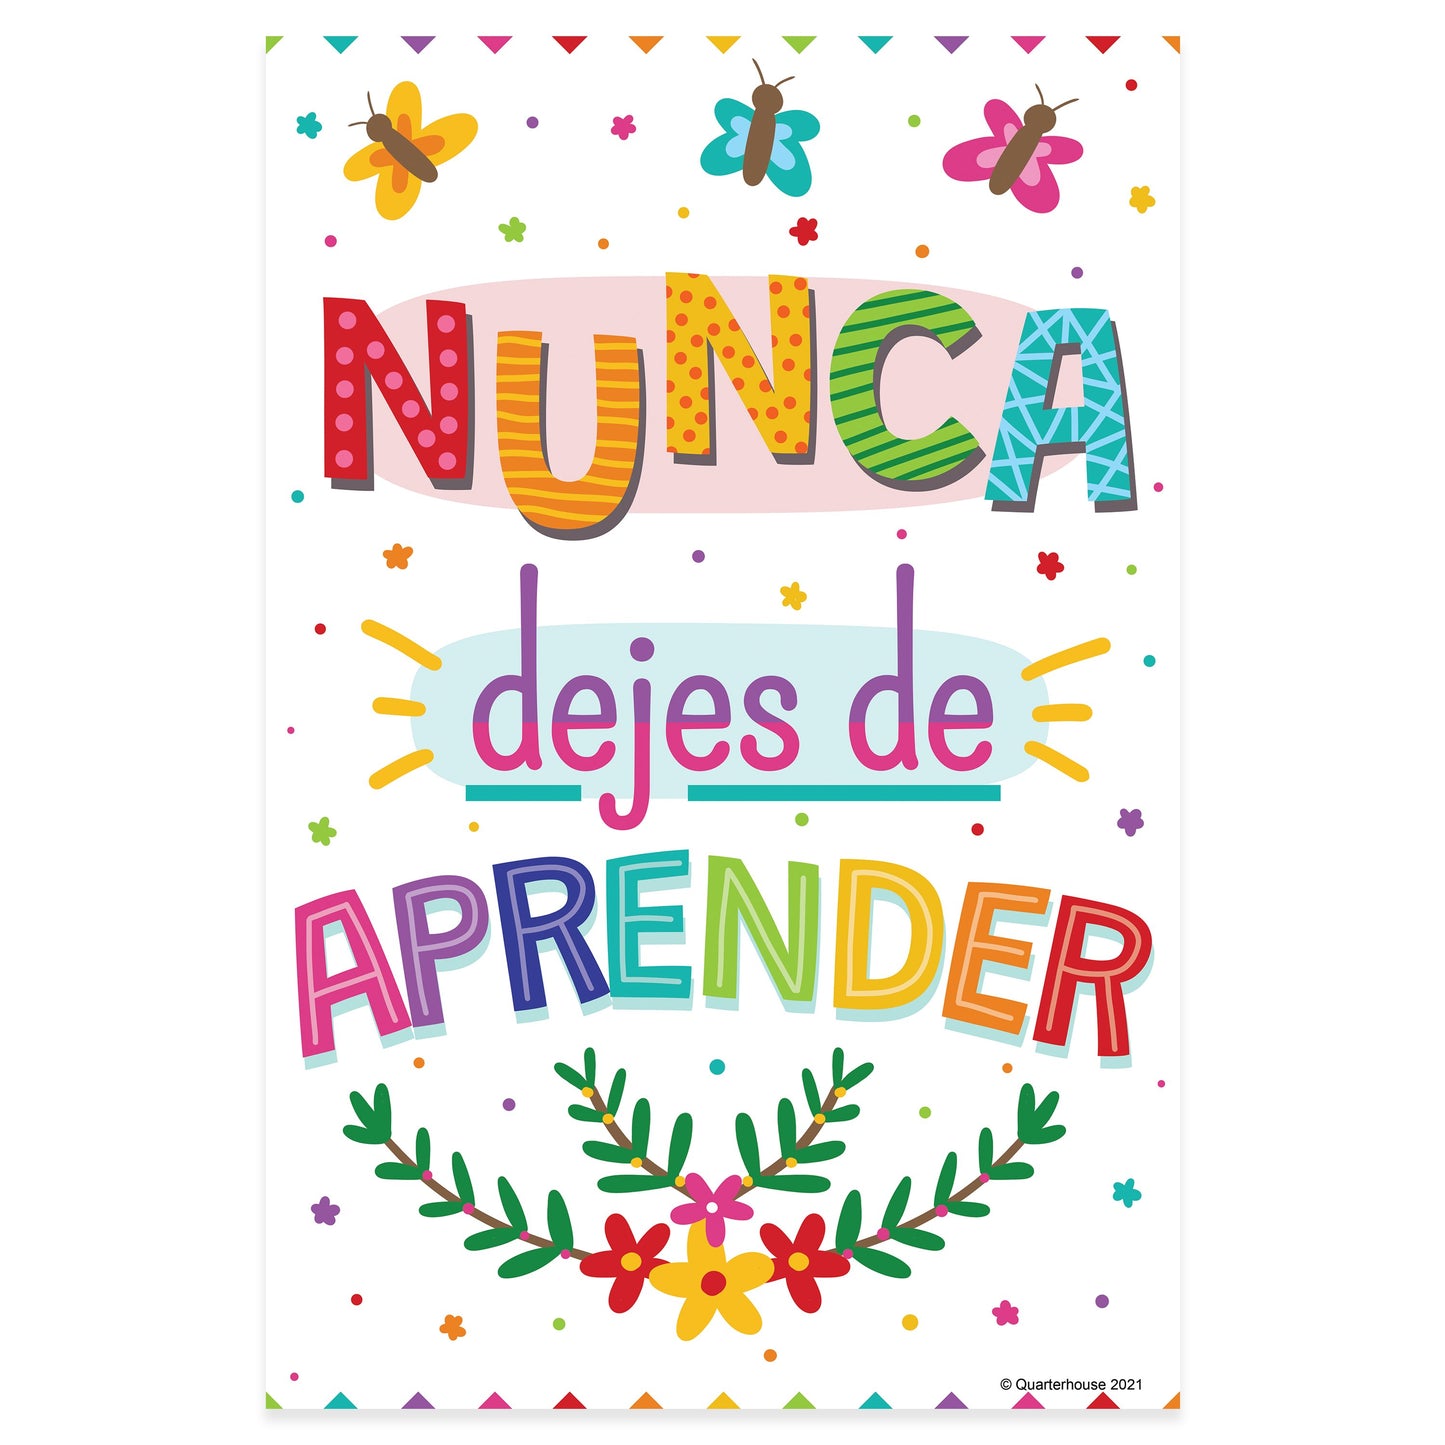 Quarterhouse 'Never Stop Learning' Spanish Motivational (Light-Themed) Poster, Spanish and ESL Classroom Materials for Teachers